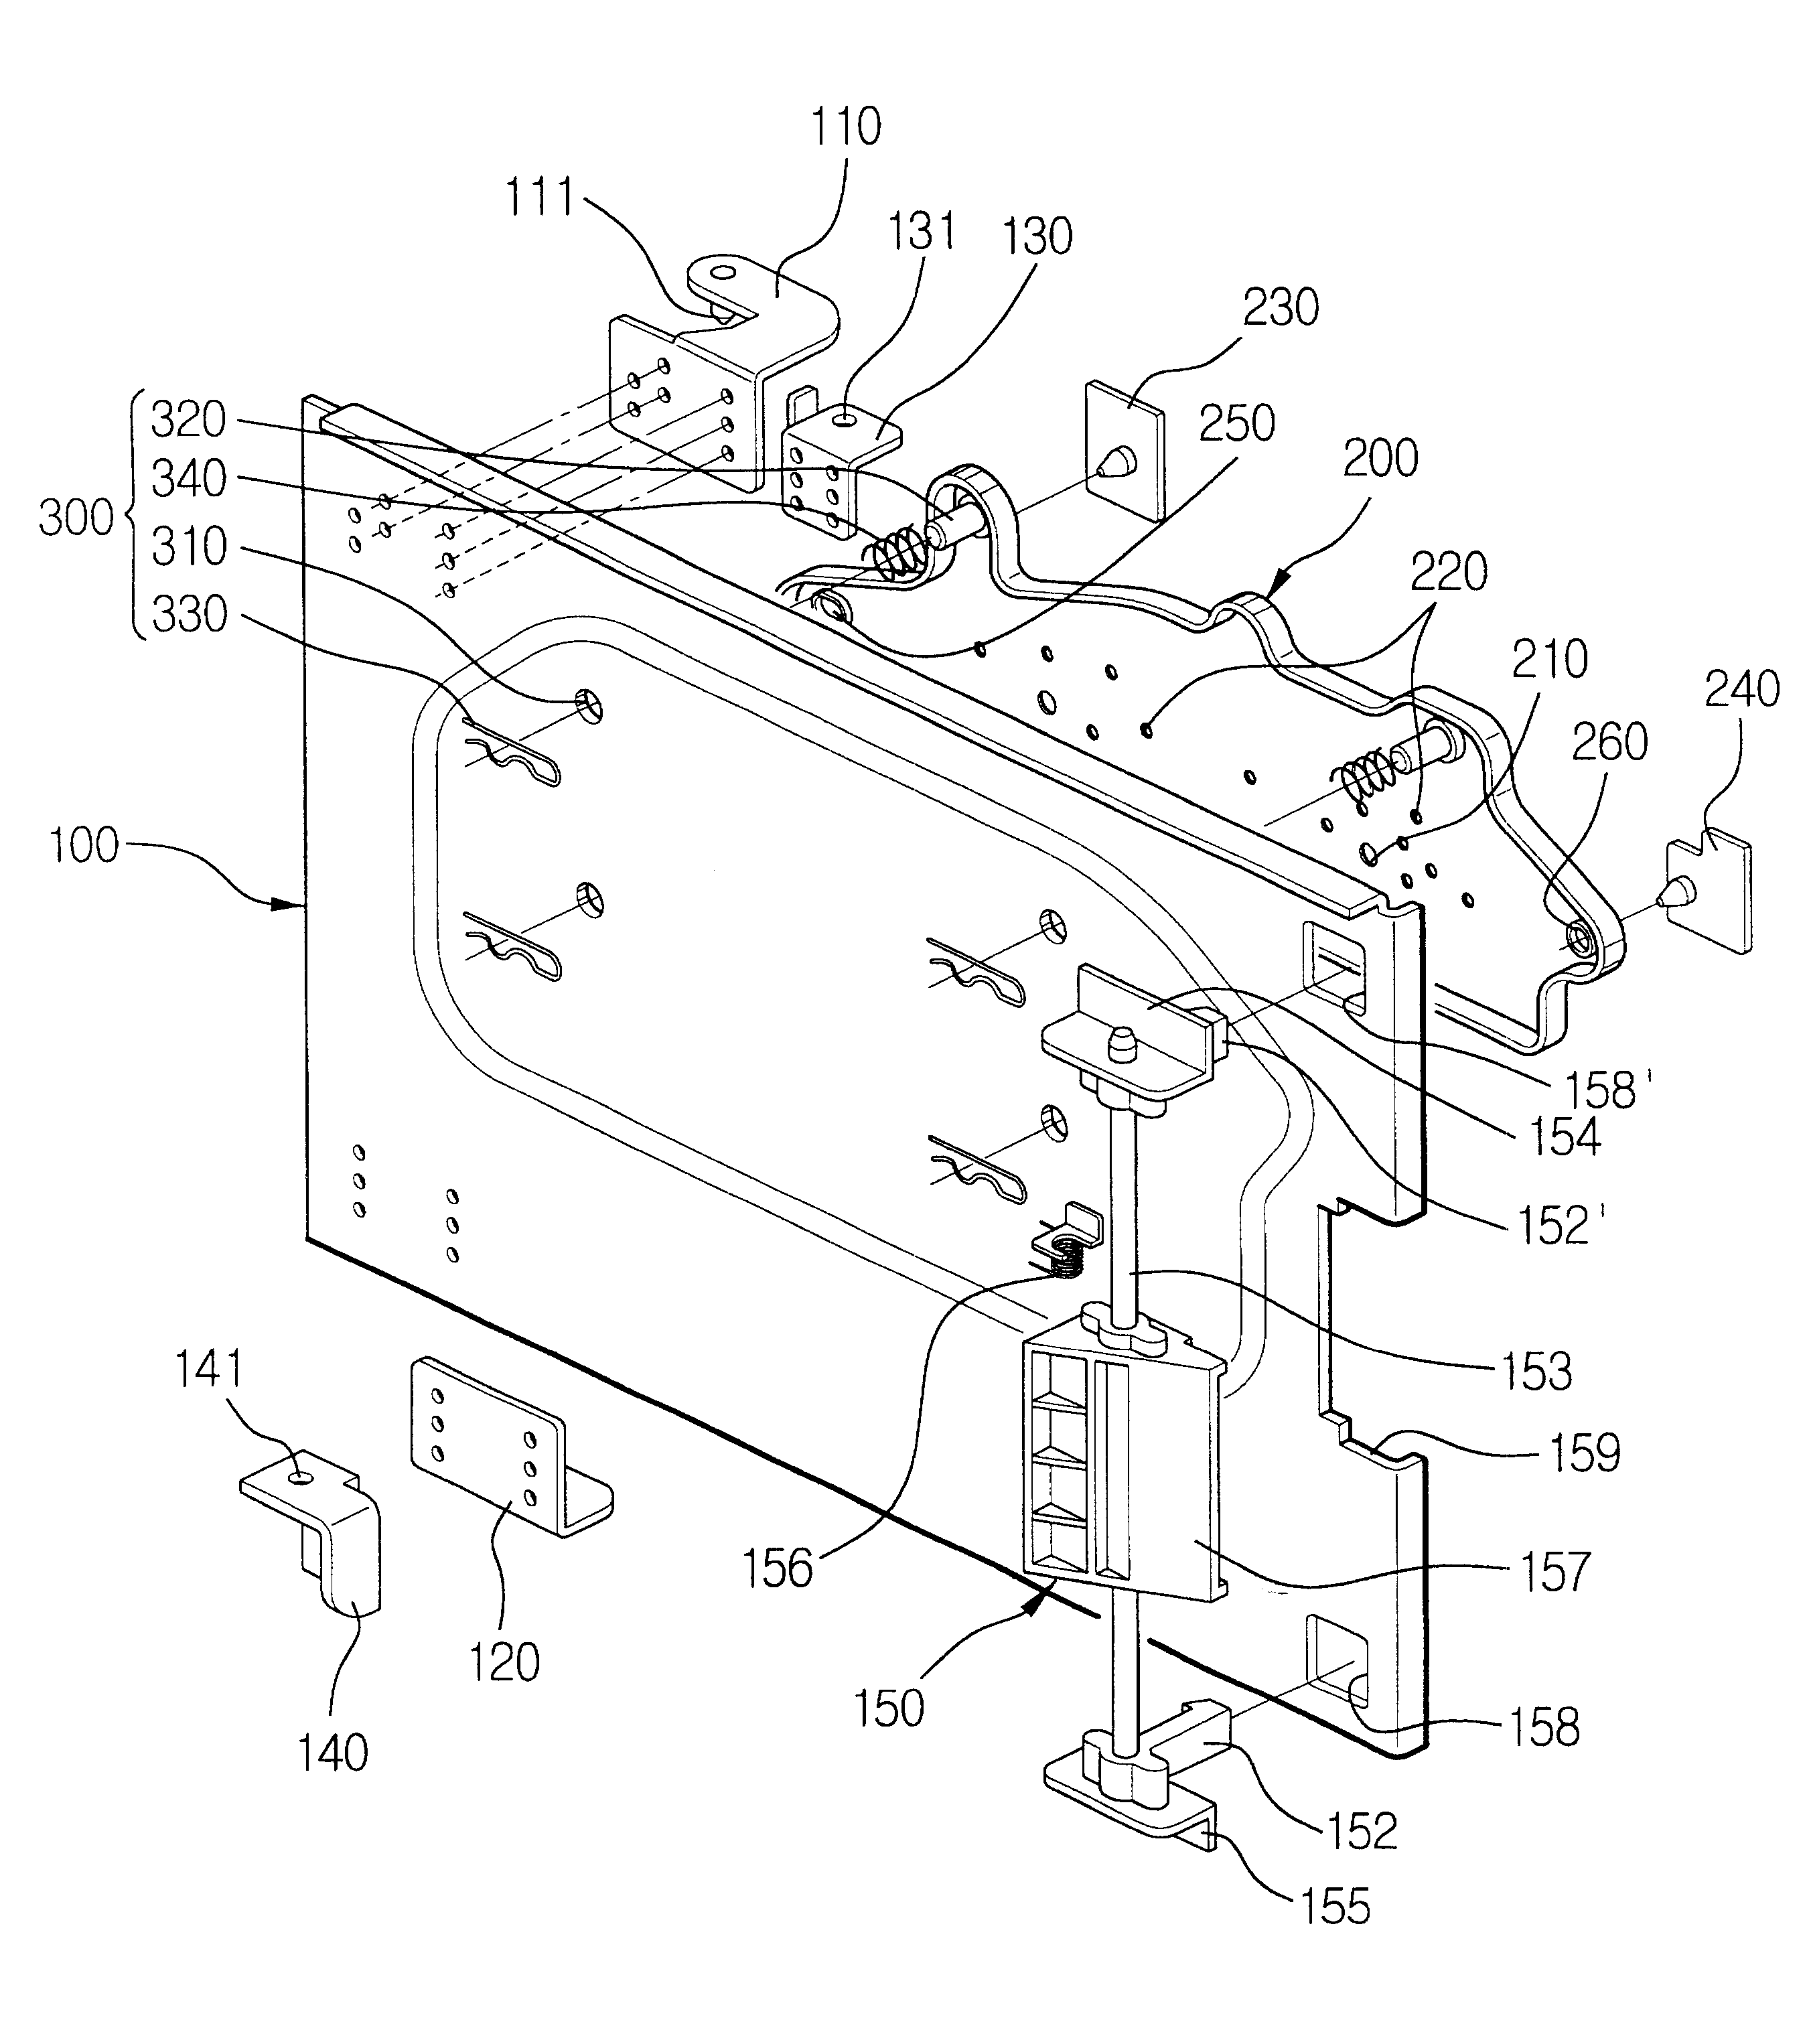 Door apparatus of an electrophotographic image printer